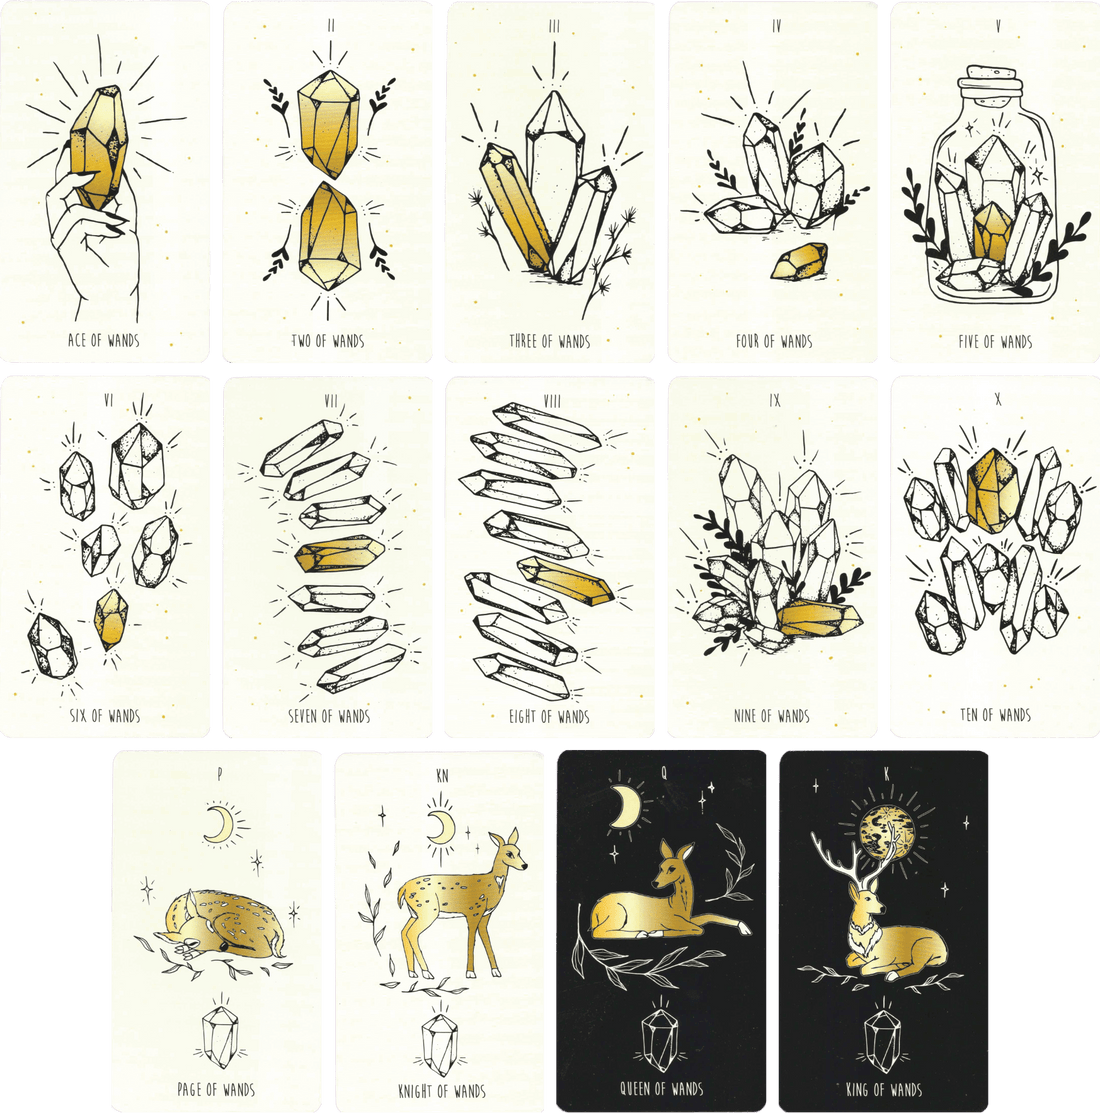 new moon tarot deck wands minor arcana cards by Mélina Lamoureux (MeliThelover)